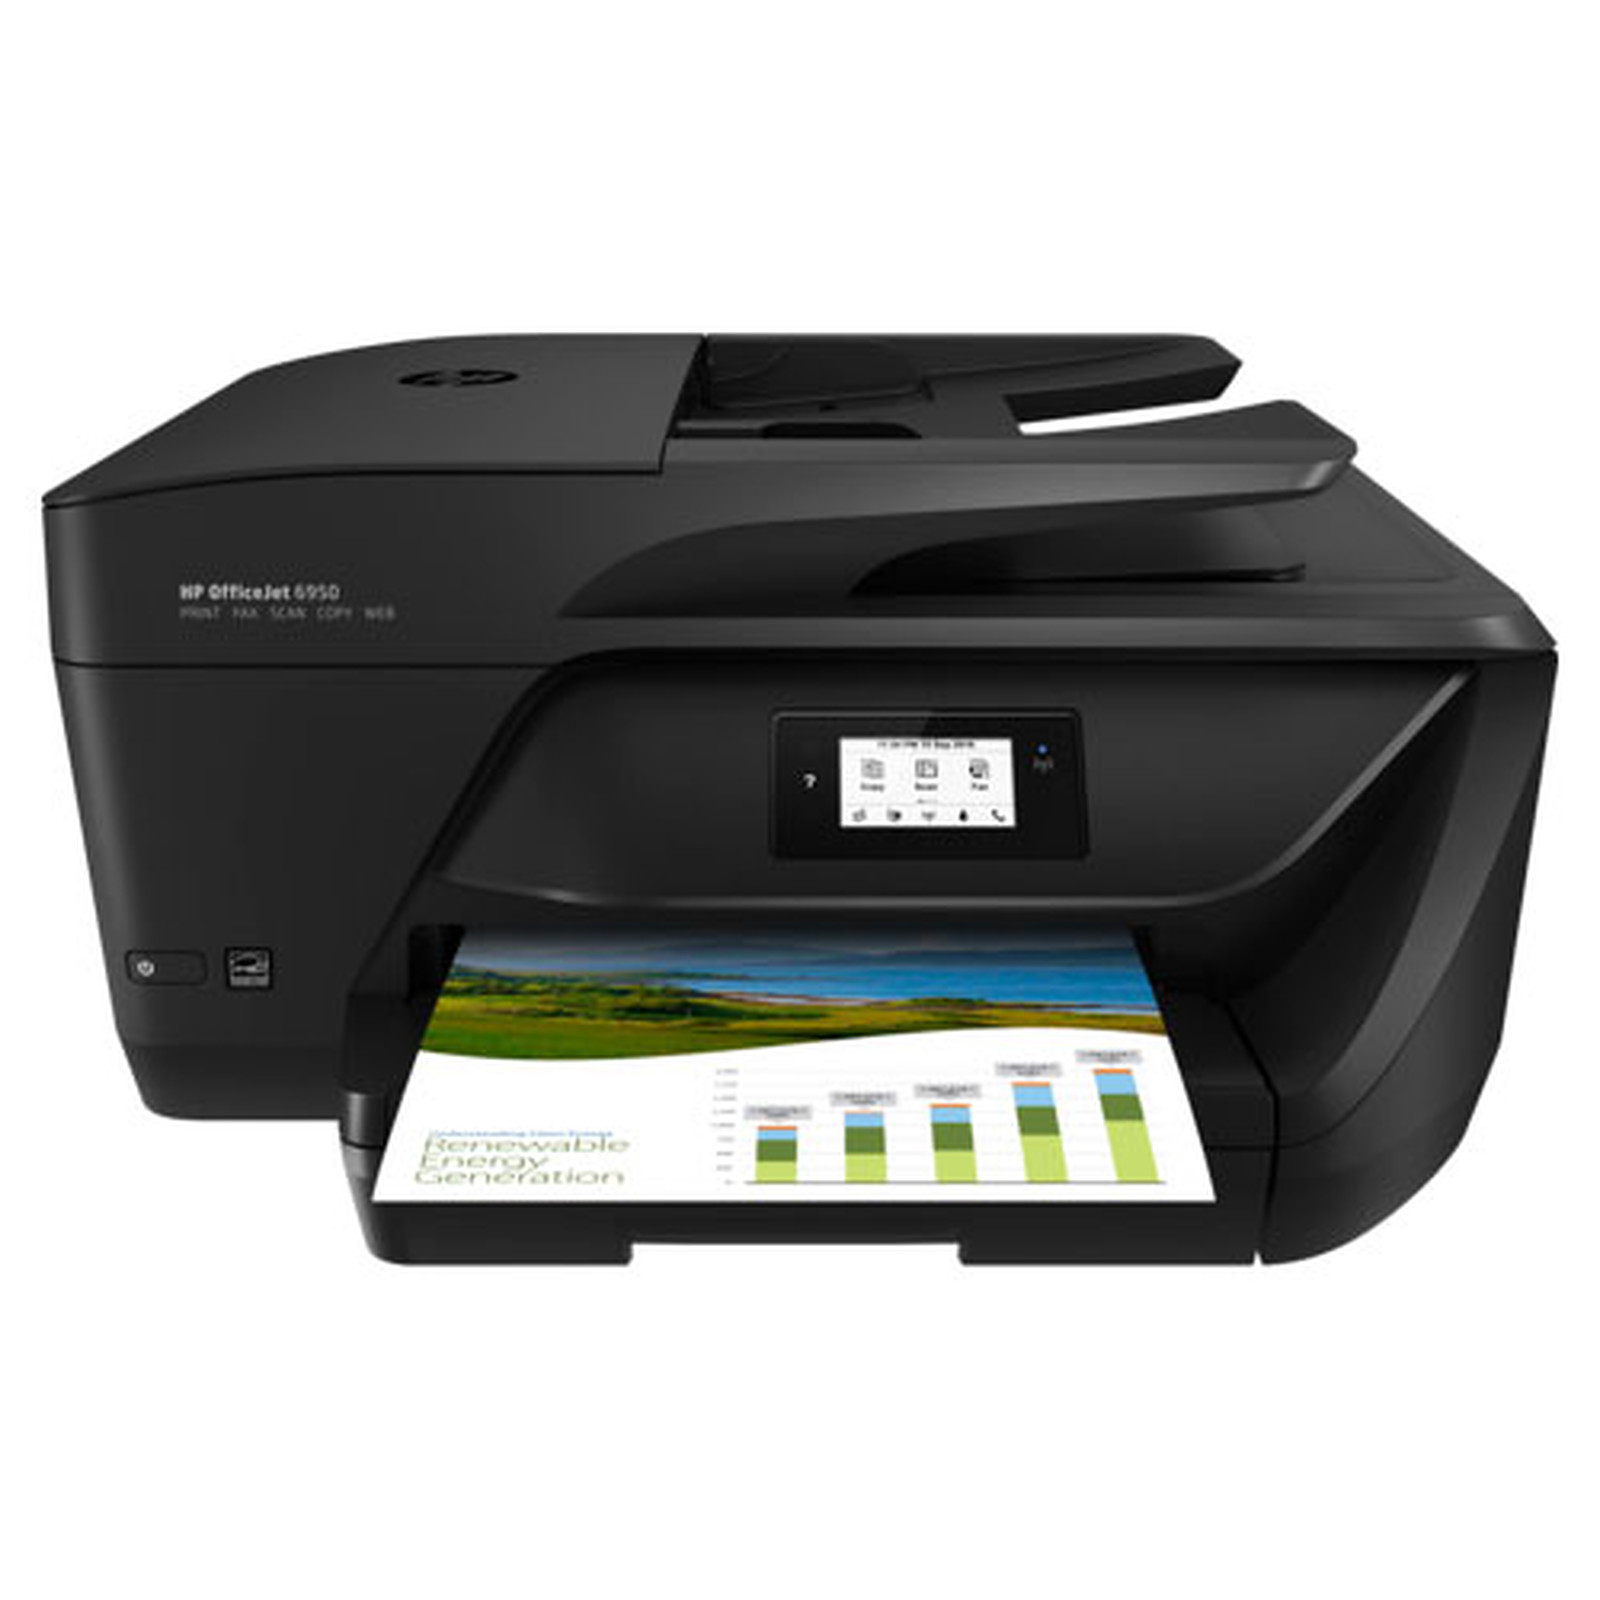 HP OfficeJet 6950 - Imprimante multifonction HP